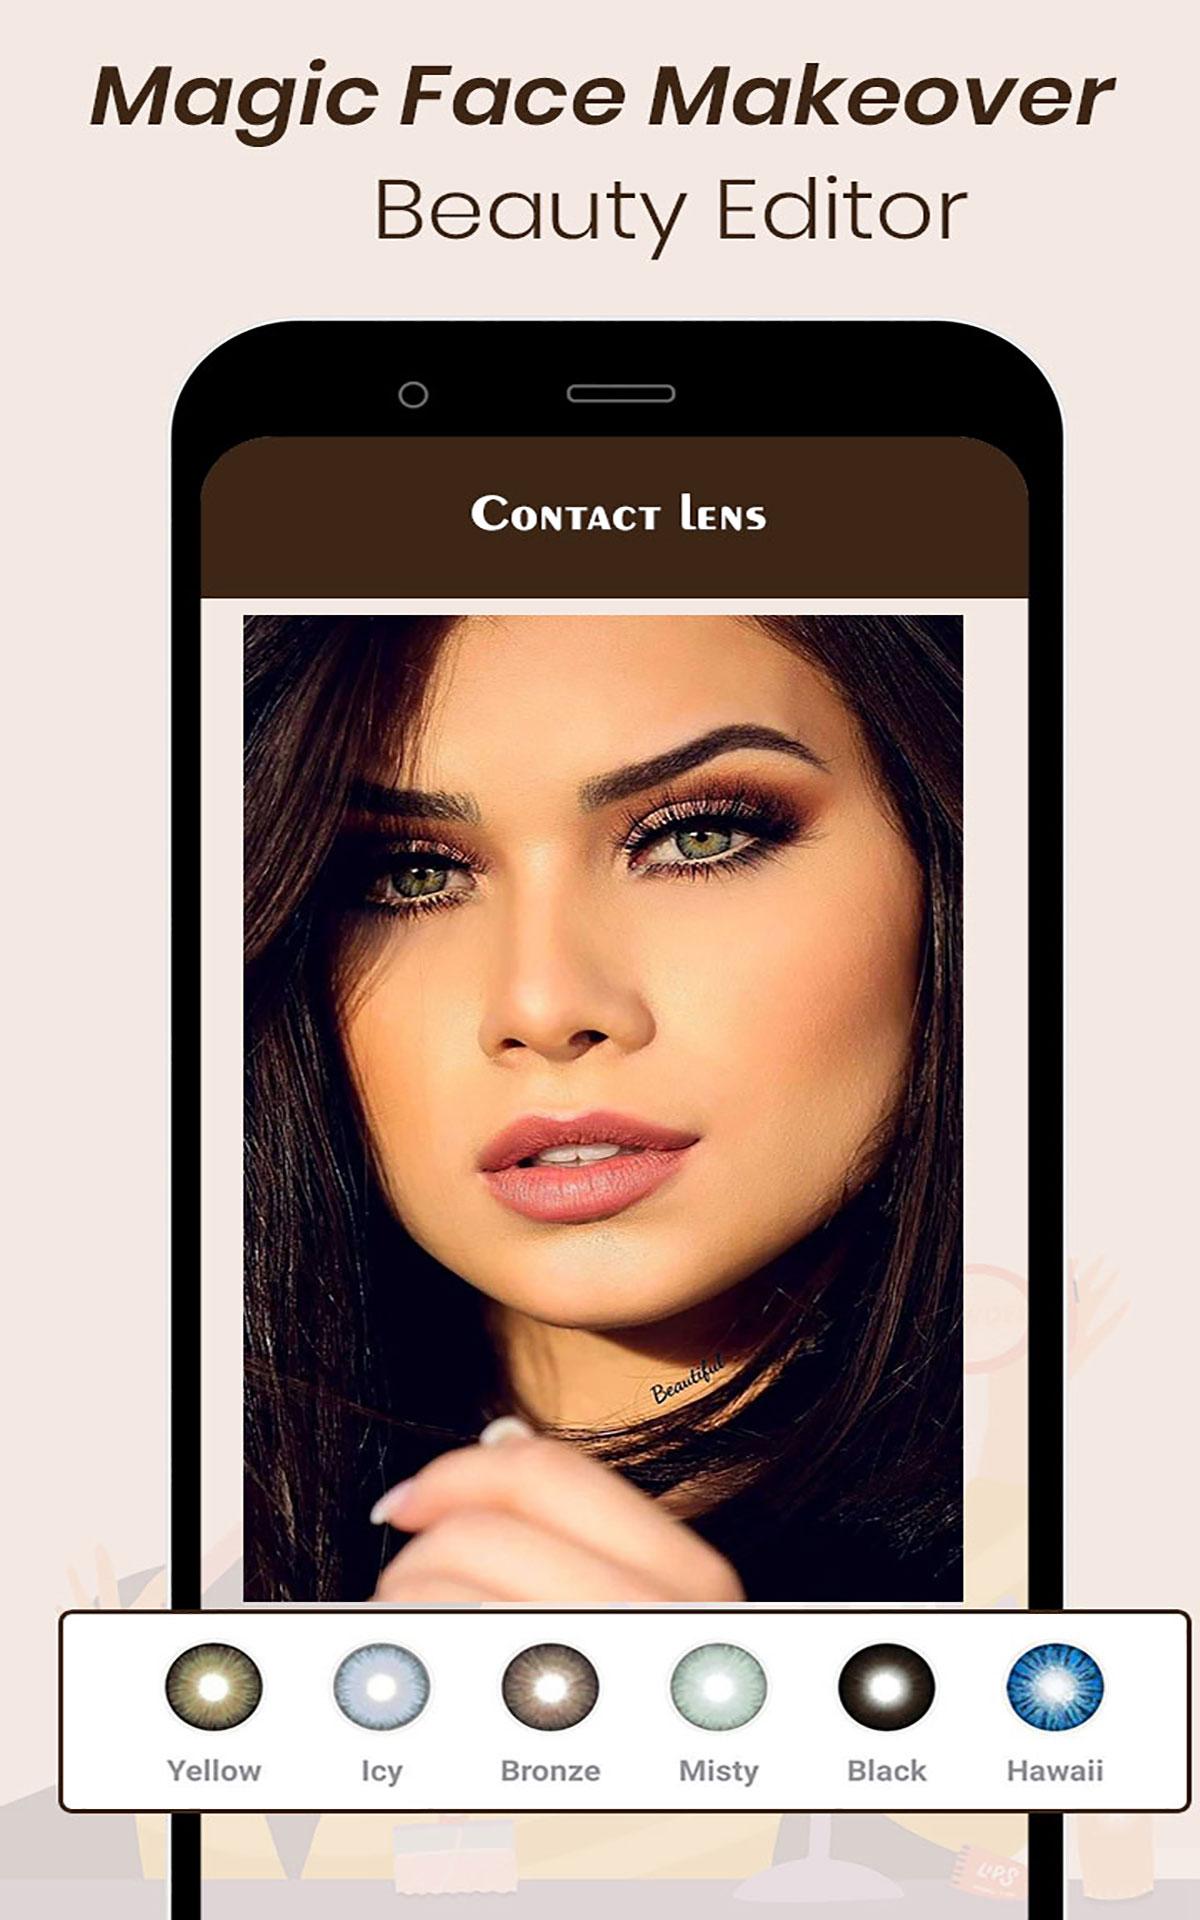 Magic Face Makeover - Beauty Editor 1.0 Screenshot 14